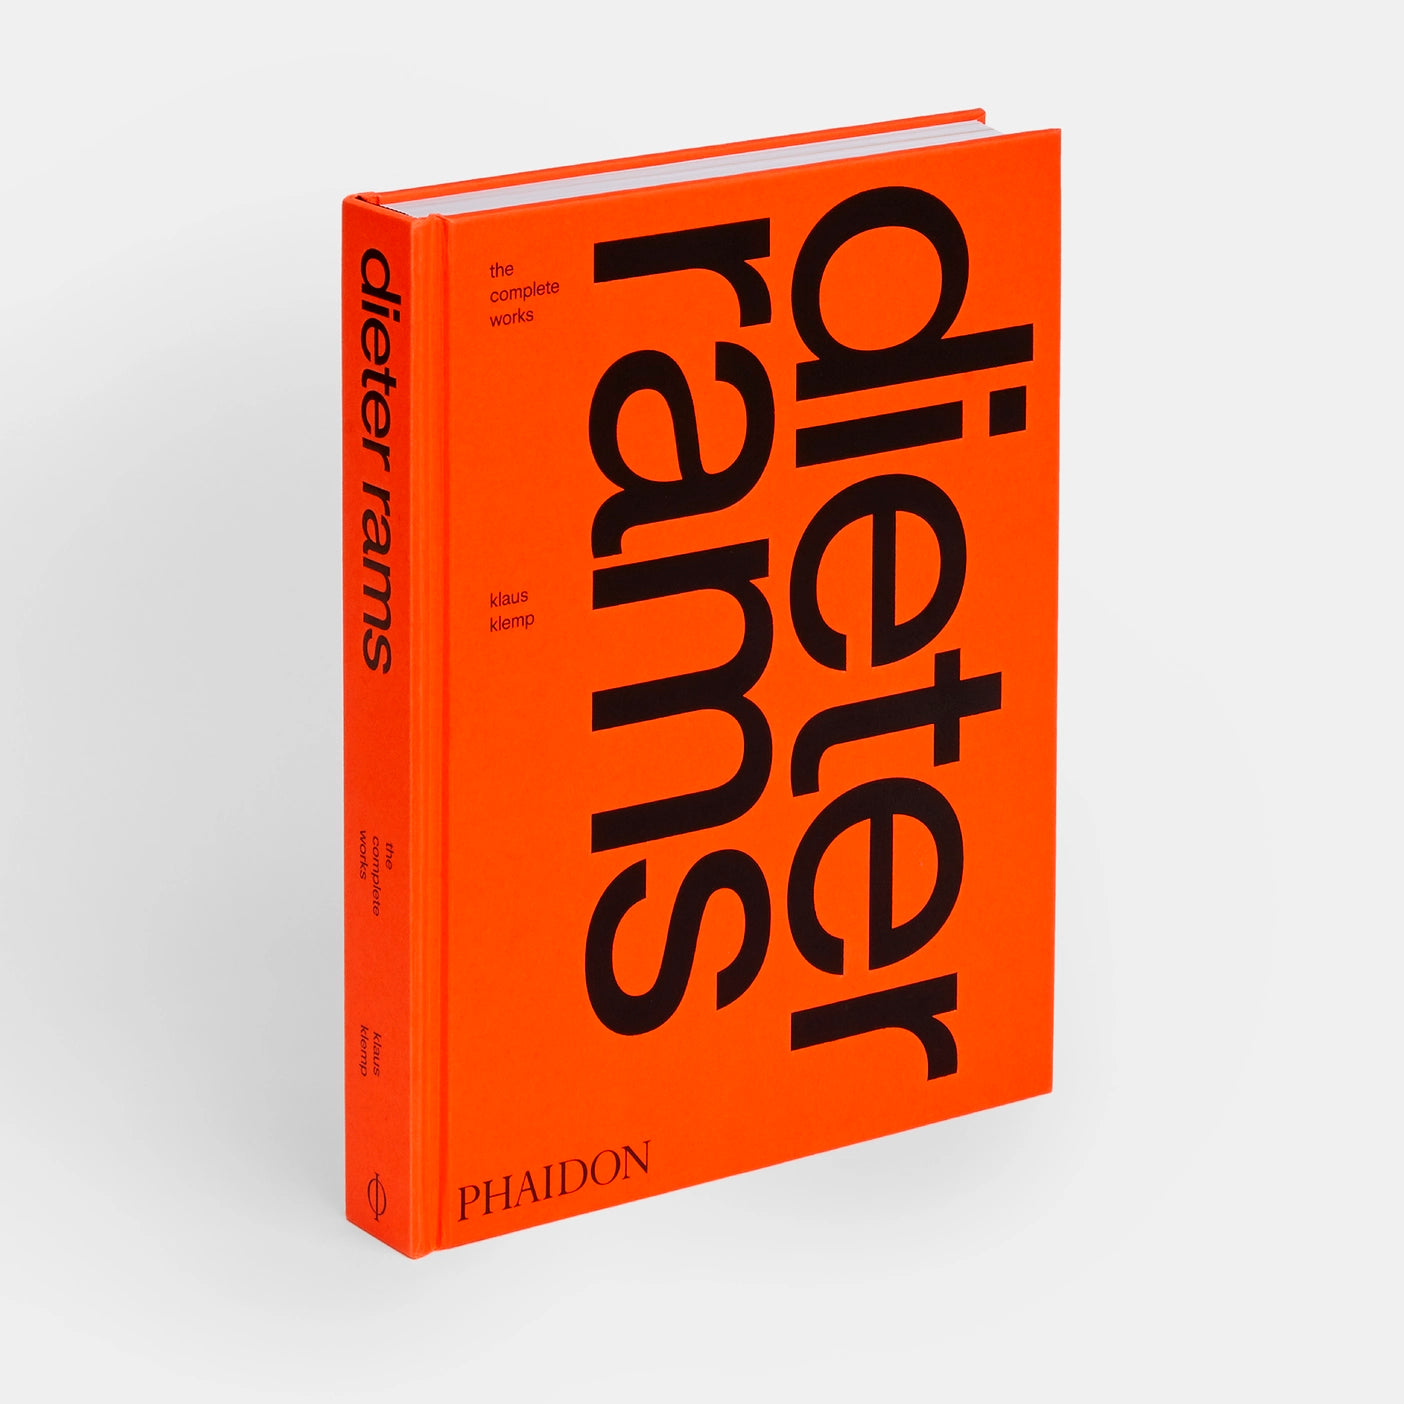 Dieter Rams: The Complete Works by Klaus Klemp